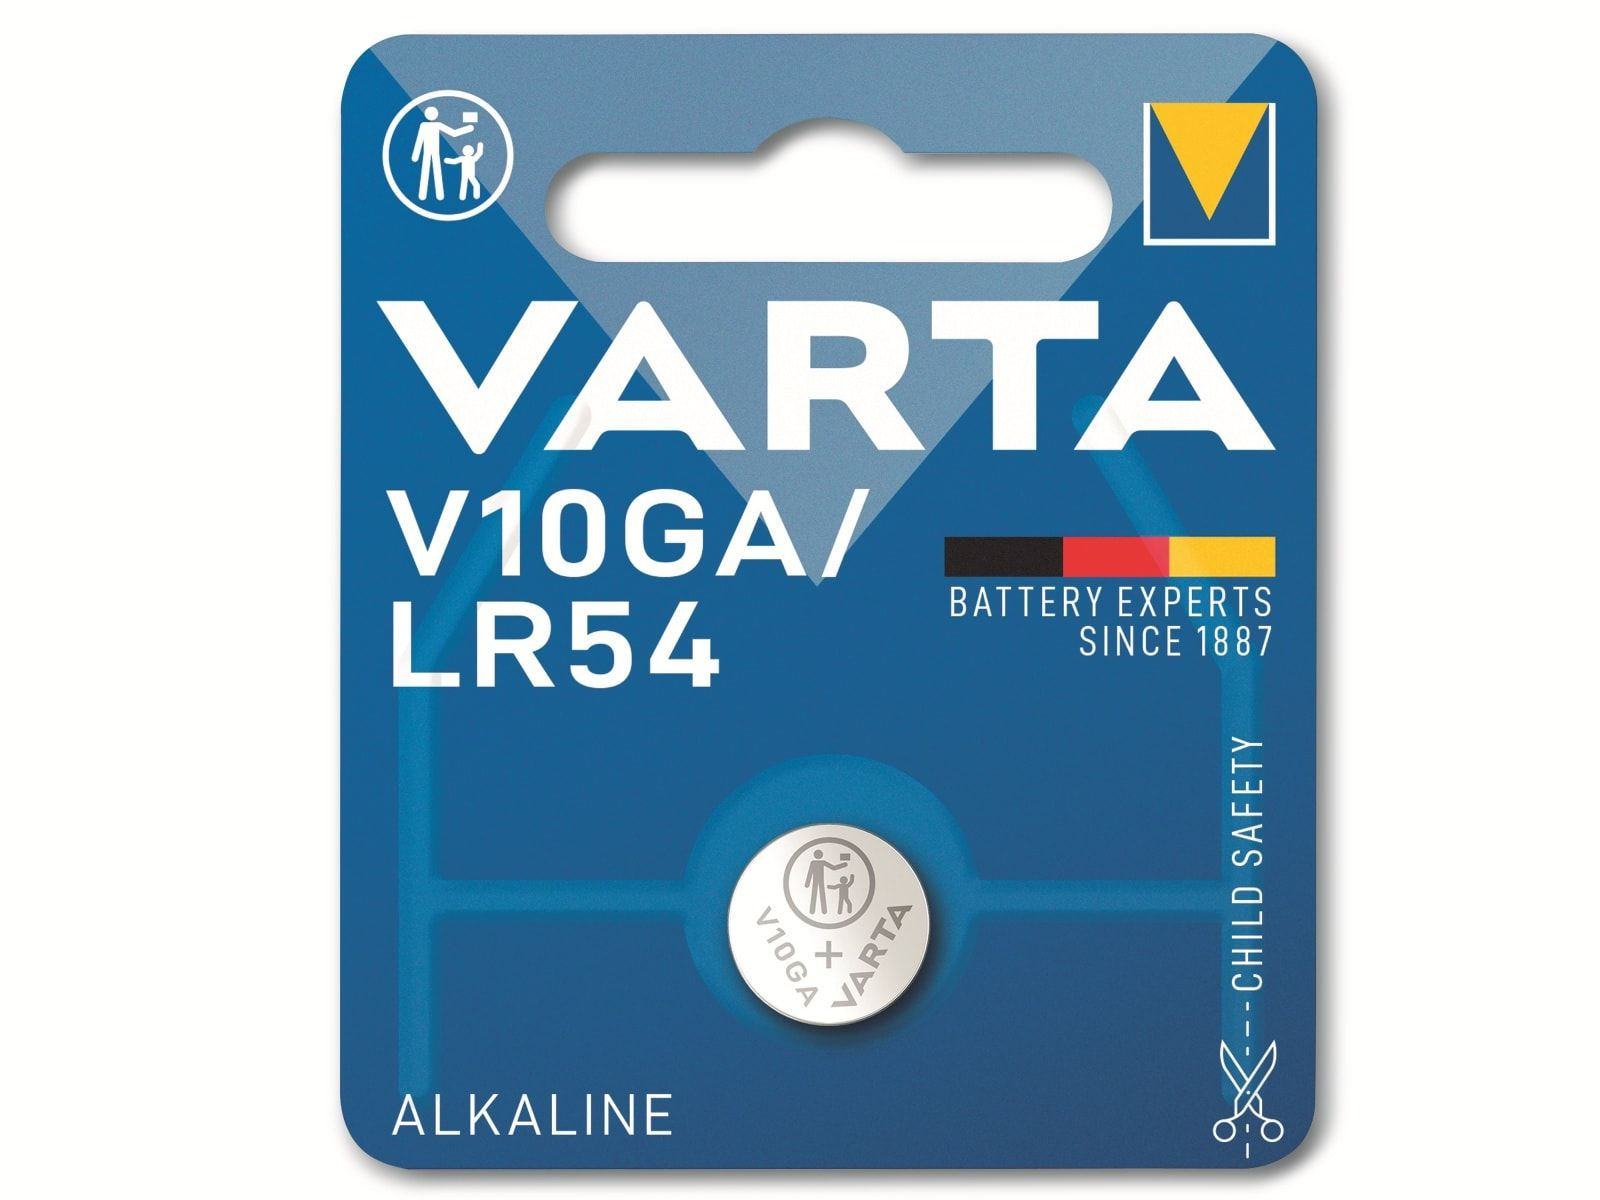 VARTA Electronics V10GA LR54 Distancia Ah Volt, 1,5V AlMn, 0.05 (1er 1.5 Fotobatterie, Mando Fotobatterie Blister)